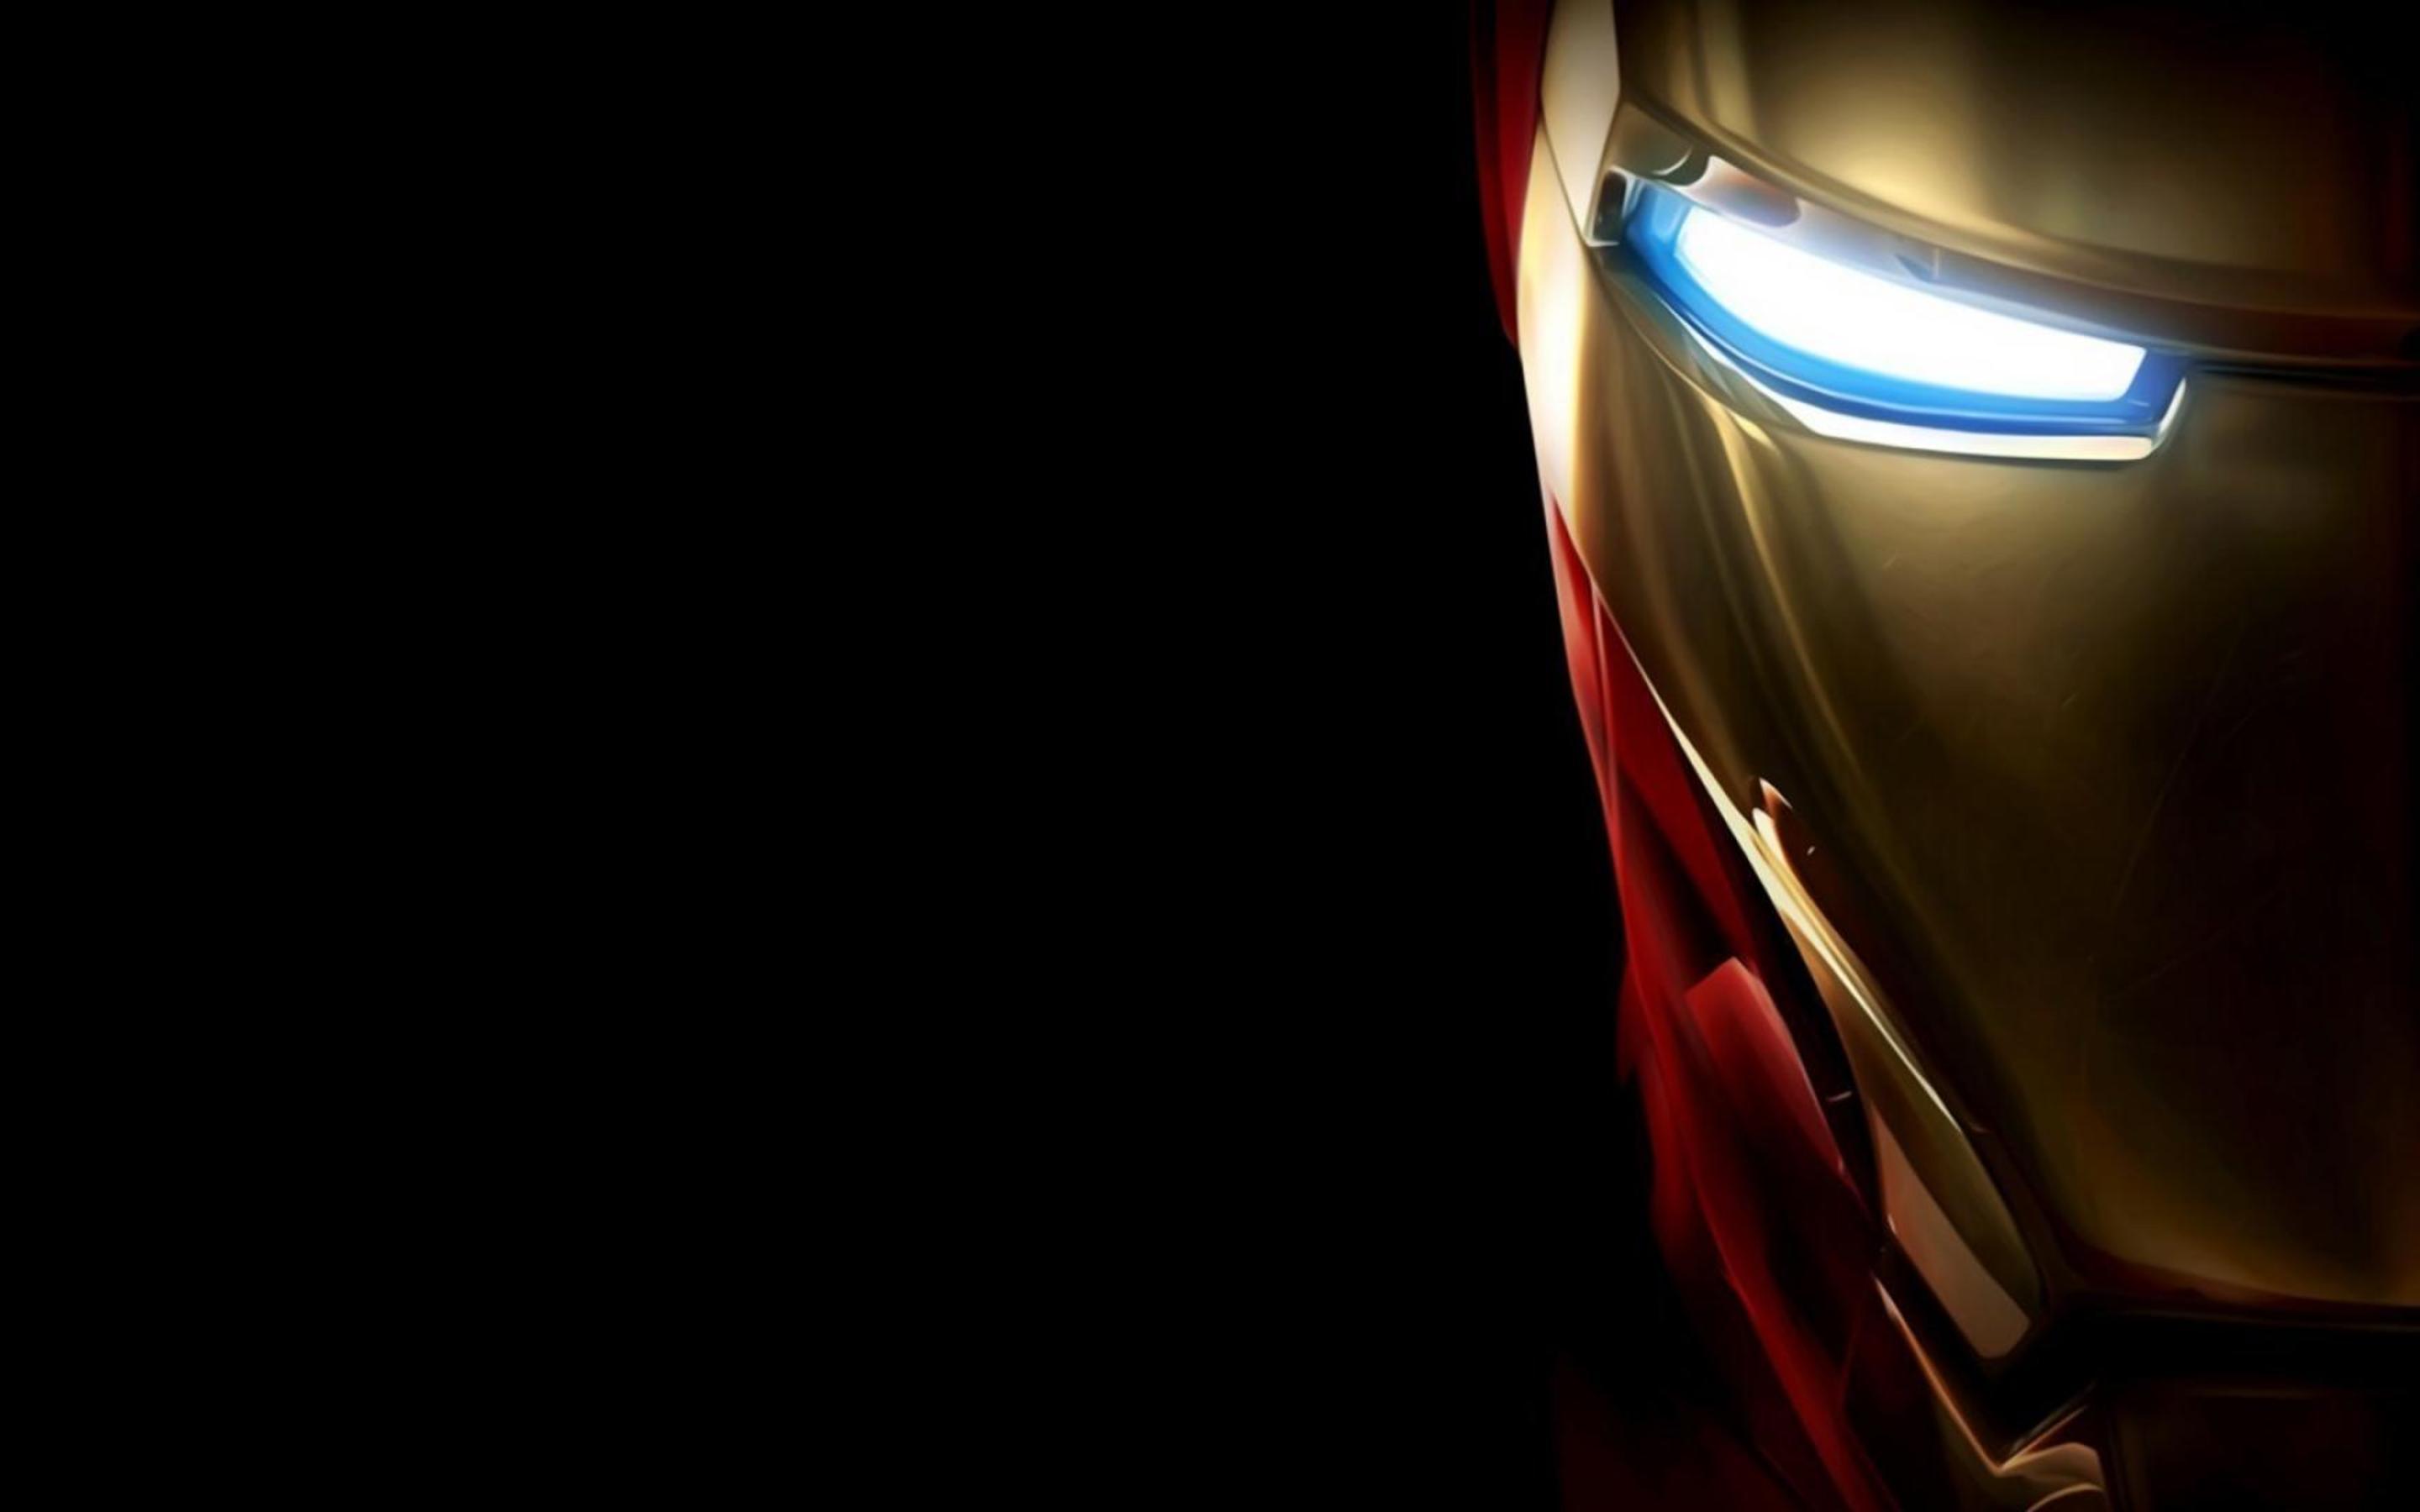 Iron Man Helmet Closeup Macbook Pro Retina HD 4k